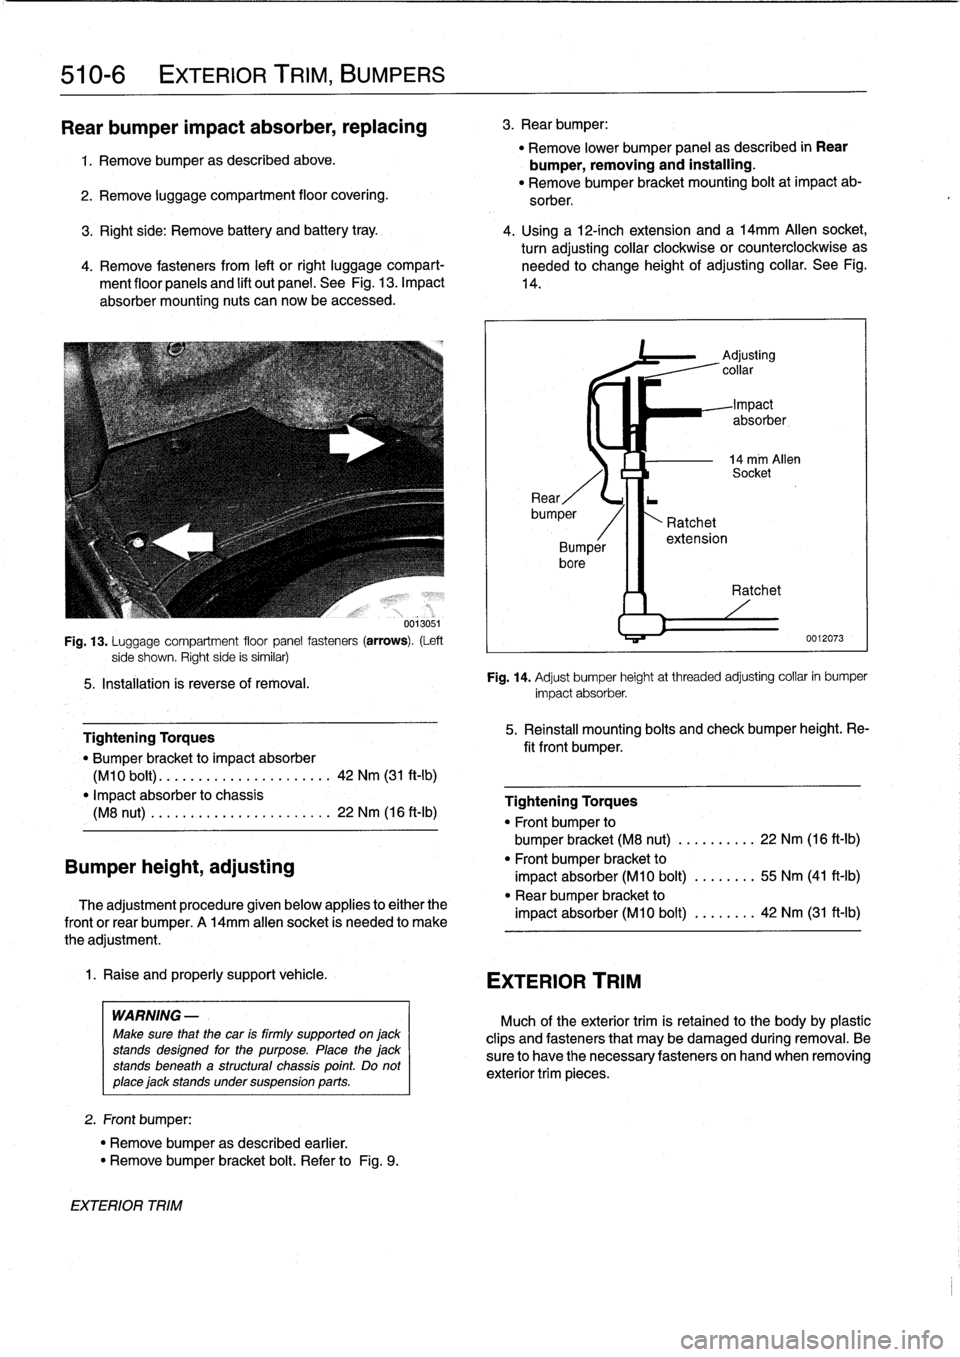 BMW 318i 1995 E36 Workshop Manual 
510-
6

	

EXTERIOR
TRIM,
BUMPERS

Rear
bumper
impact
absorber,replacing

1
.
Remove
bumperas
described
above
.

2
.
Remove
luggage
compartment
floor
covering
.

Fig
.
13
.
Luggage
compartment
floor
